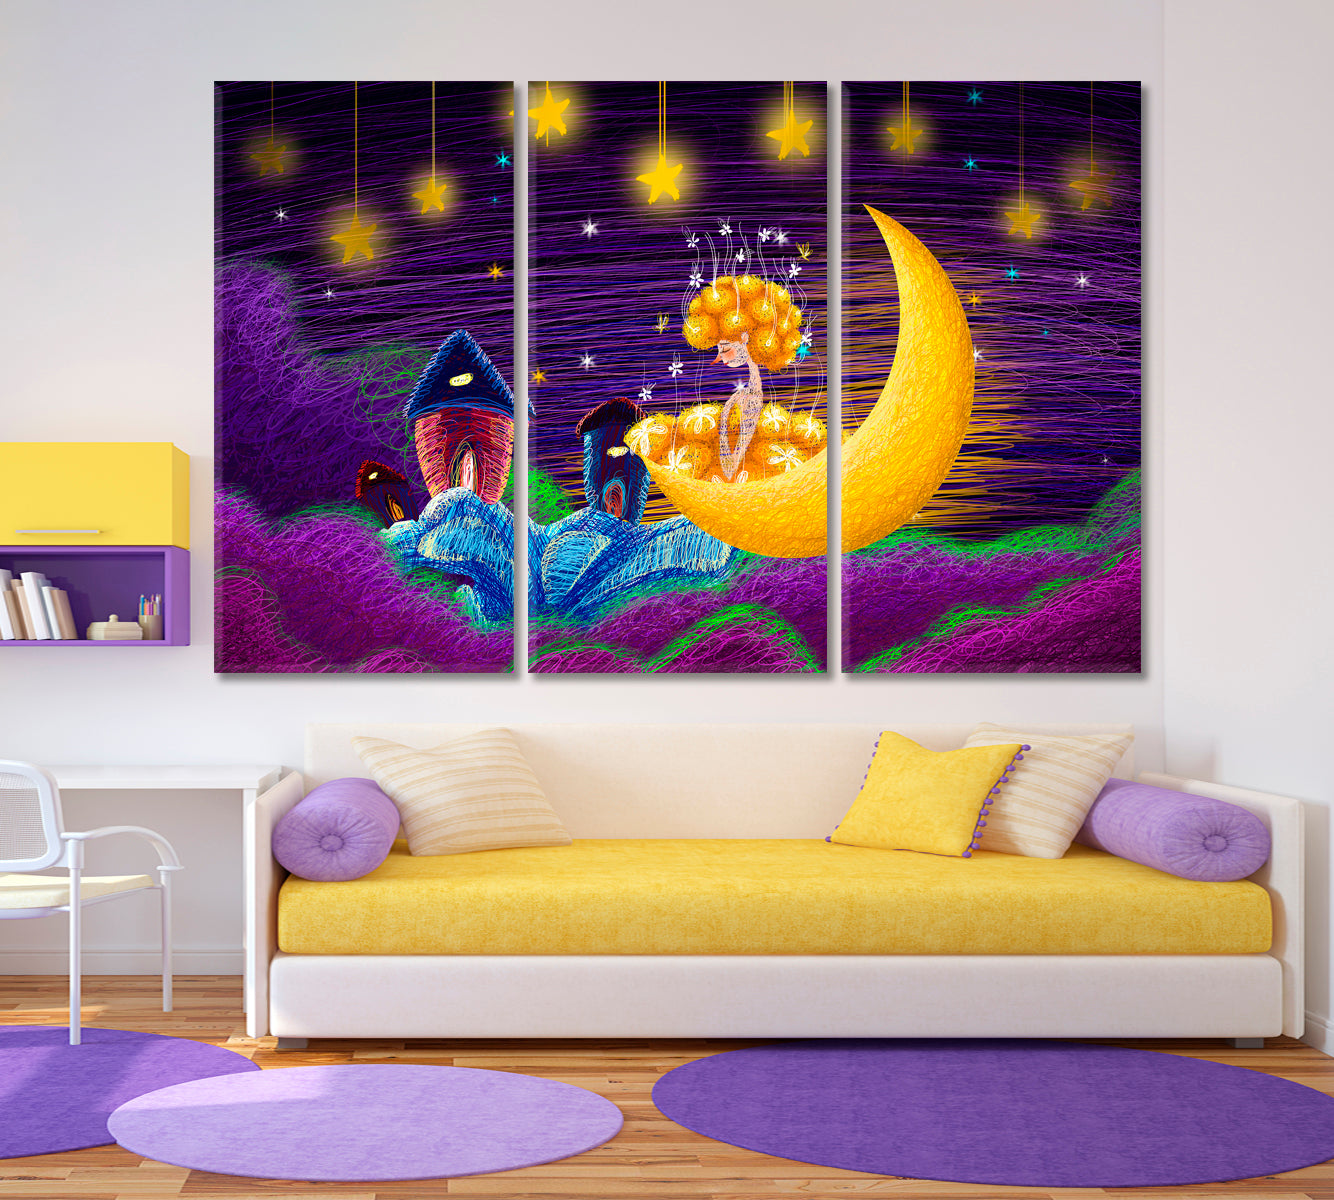 Night Fairy-tale Children's Room Wall Art Canvas Print Kids Room Canvas Art Print Artesty 3 panels 36" x 24" 